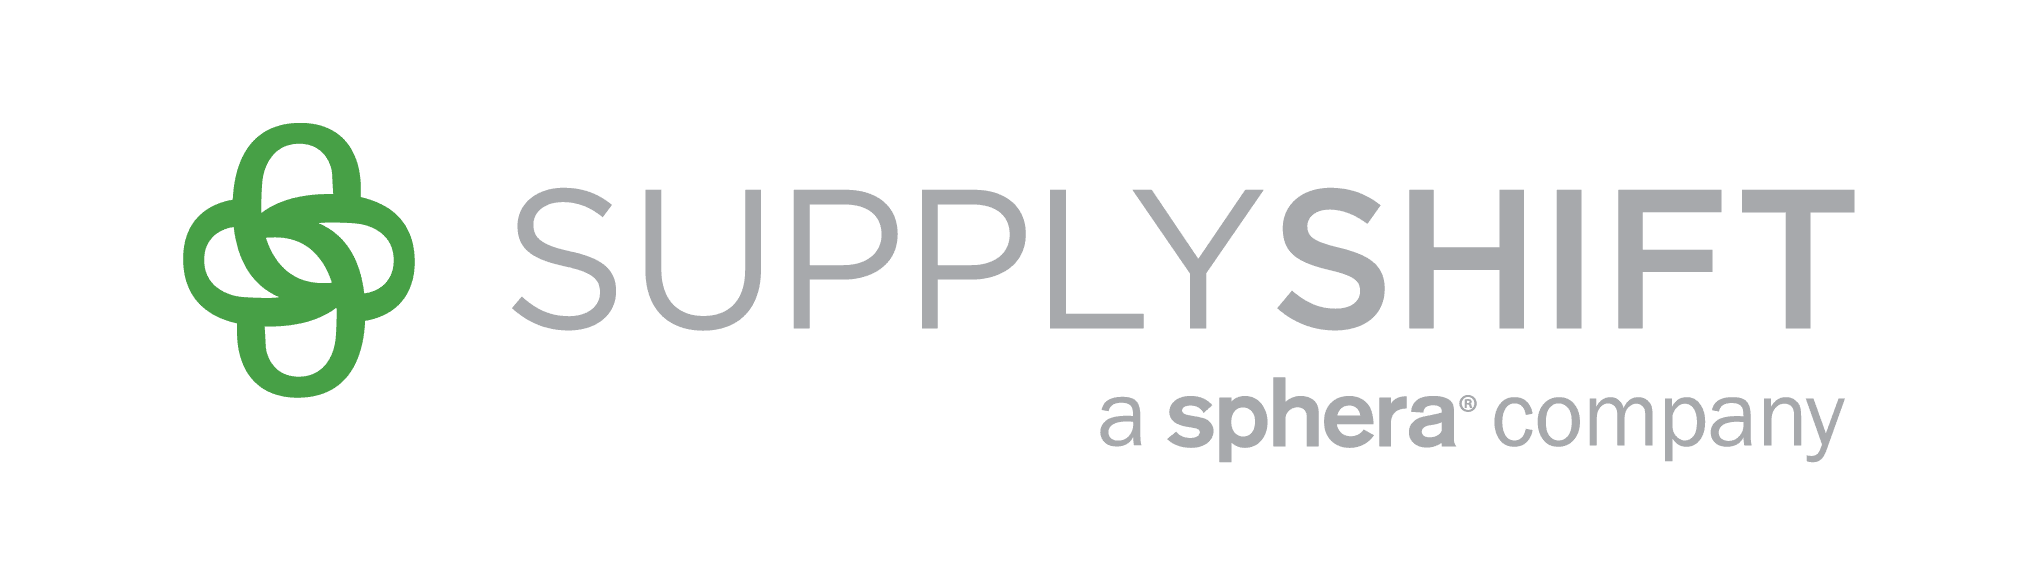 SupplyShift a sphera company